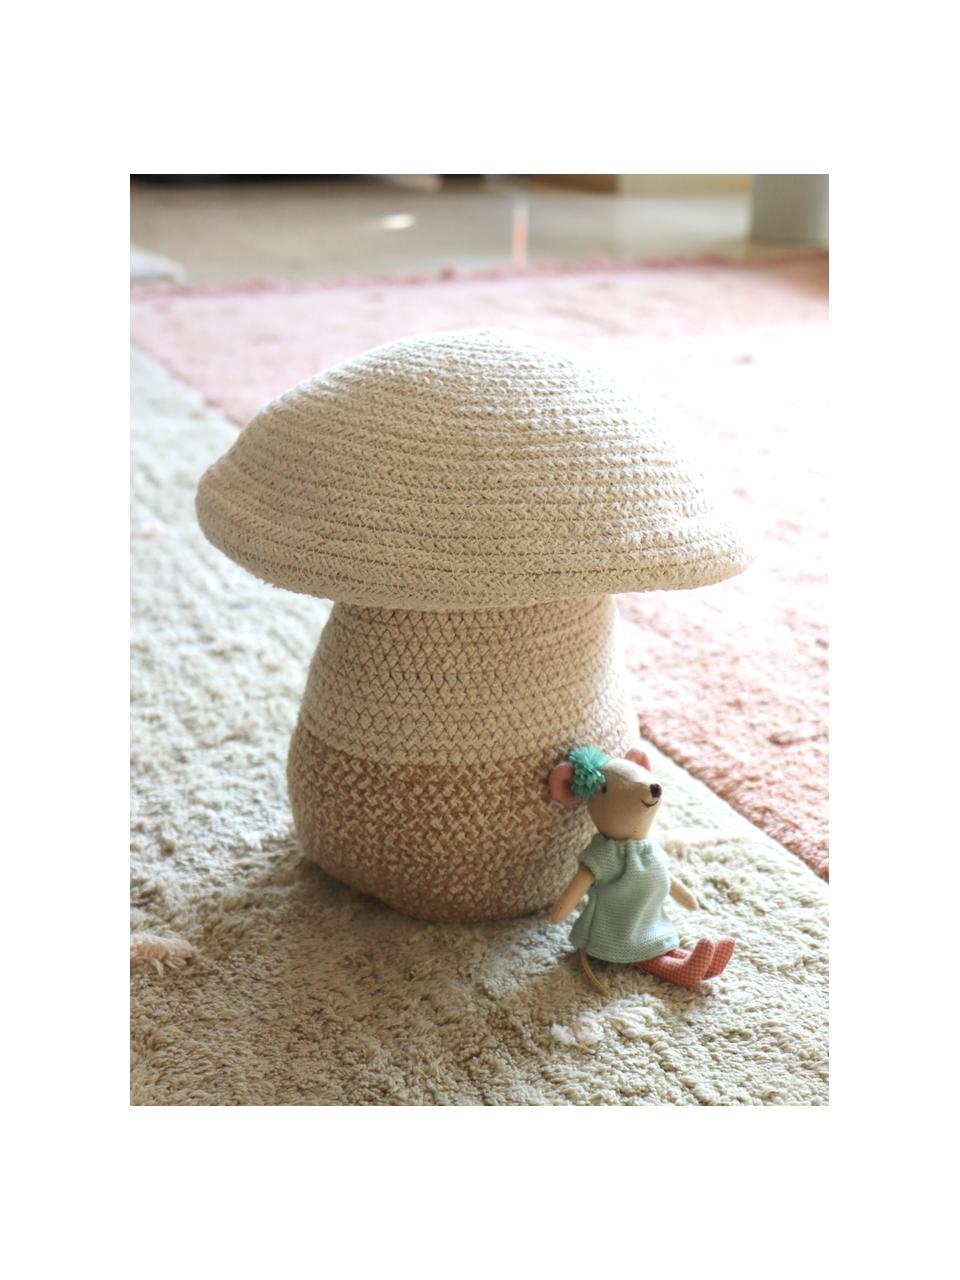 Cesta infantil artesanal Mushroom, 27 cm, 97% algodón, 3% fibra sintética, Blanco crema, tonos beige, Ø 30 x Al 27 cm